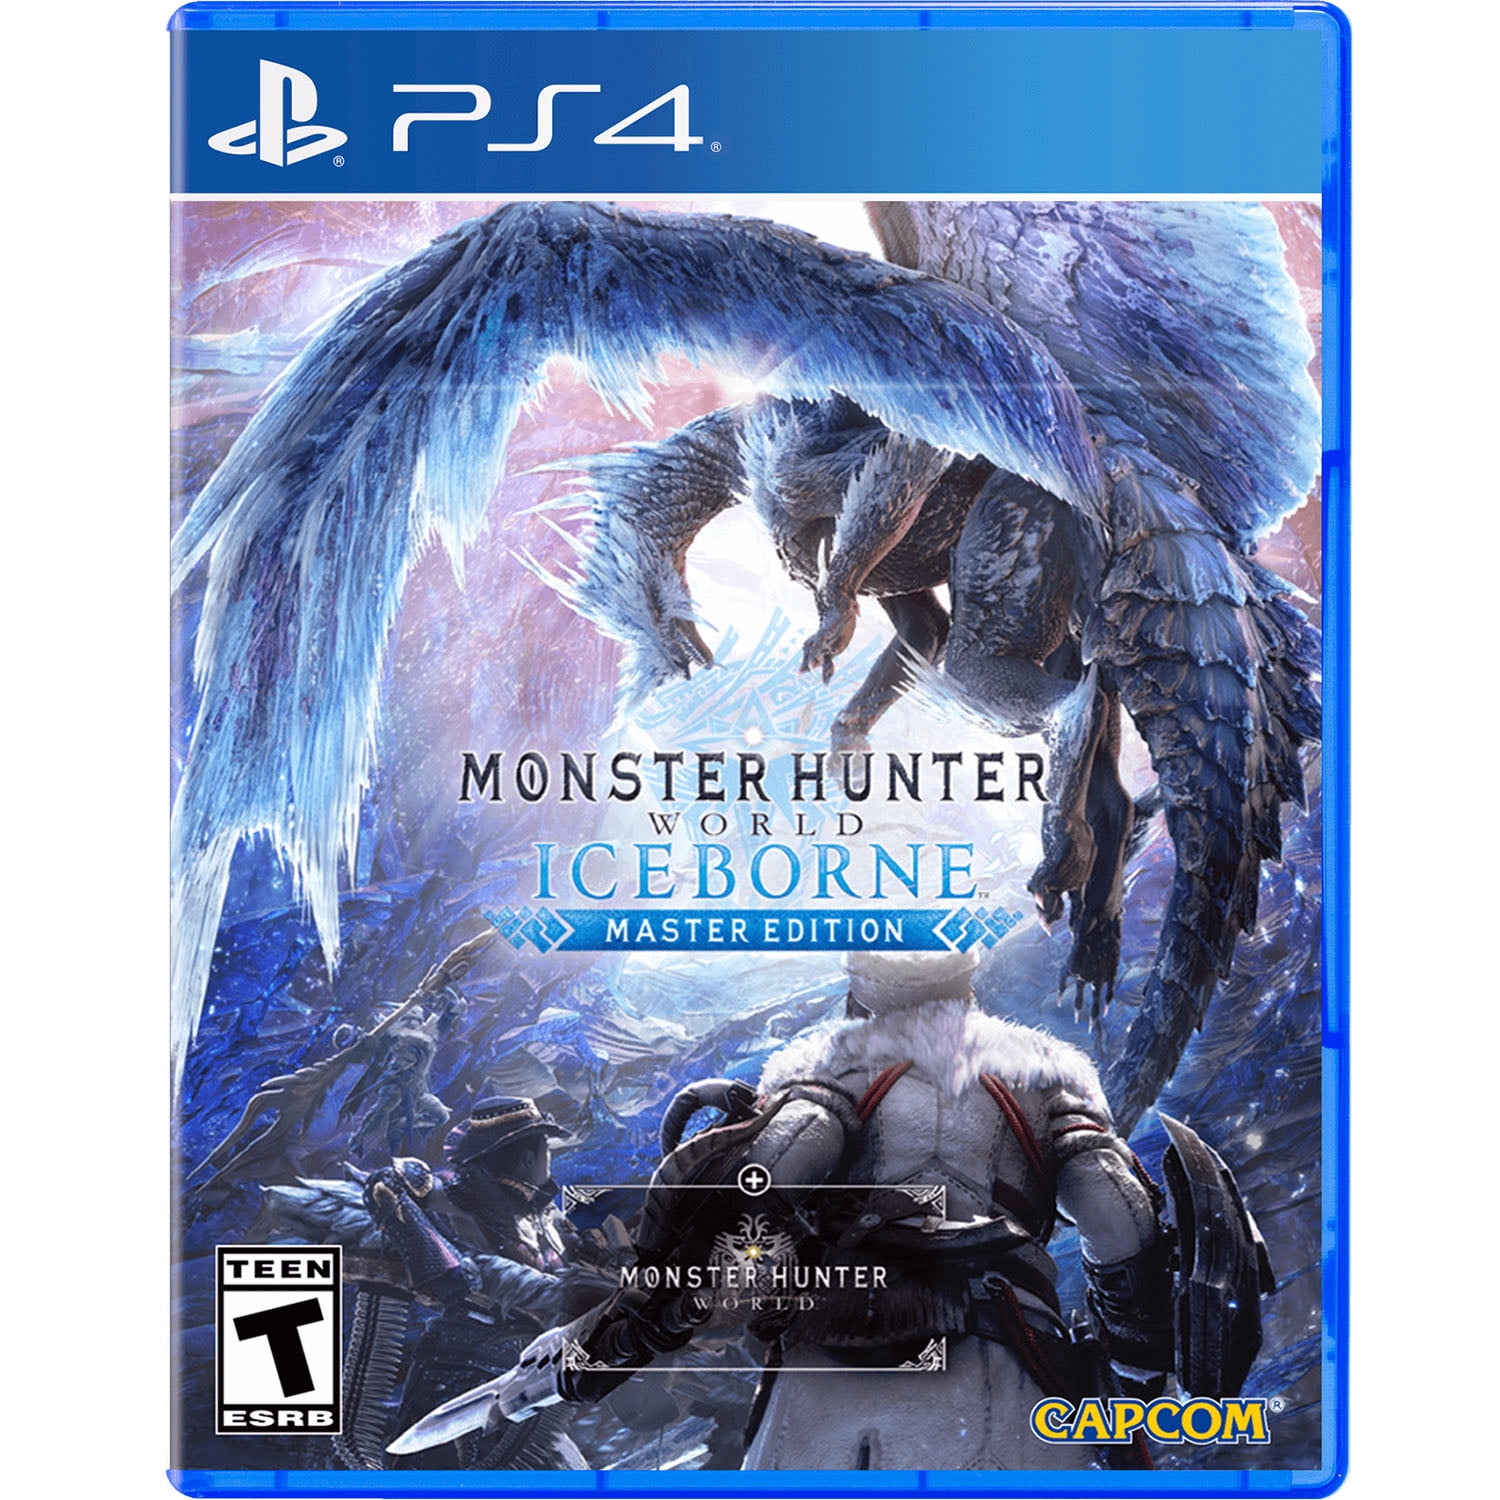 Monster Hunter World Iceborne Master Edition Playstation 4 Capcom Walmart Com Walmart Com